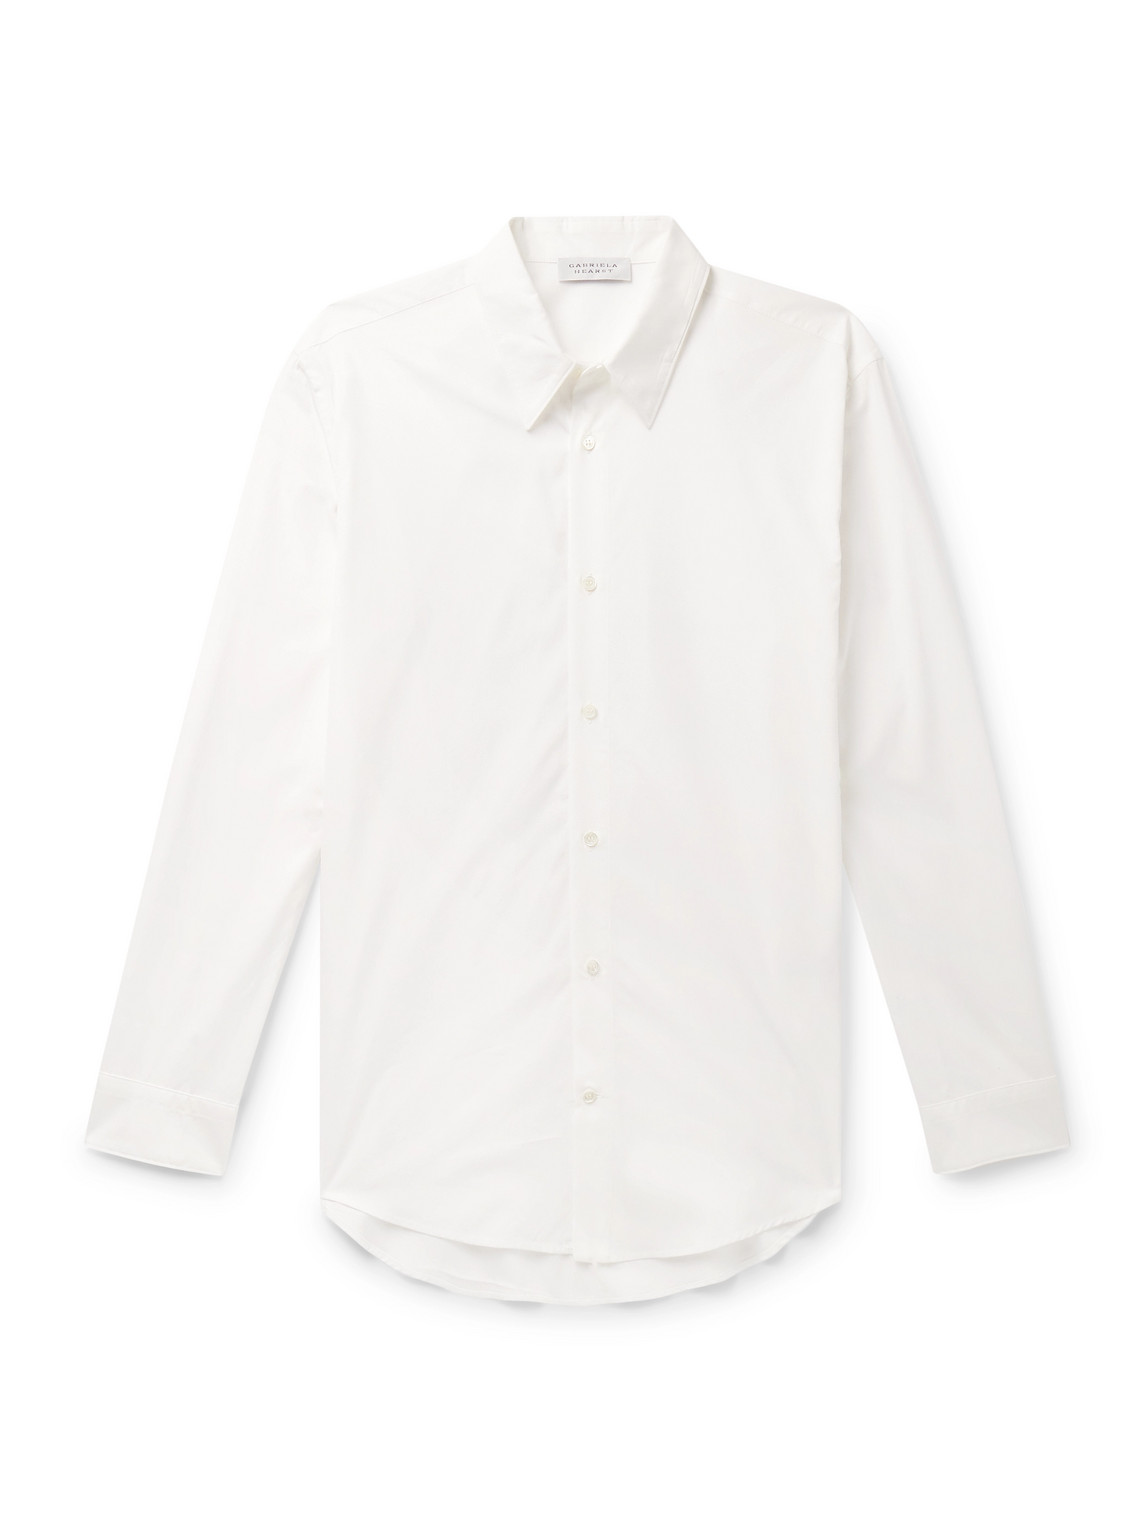 Quevedo Slim-Fit Cotton-Poplin Shirt